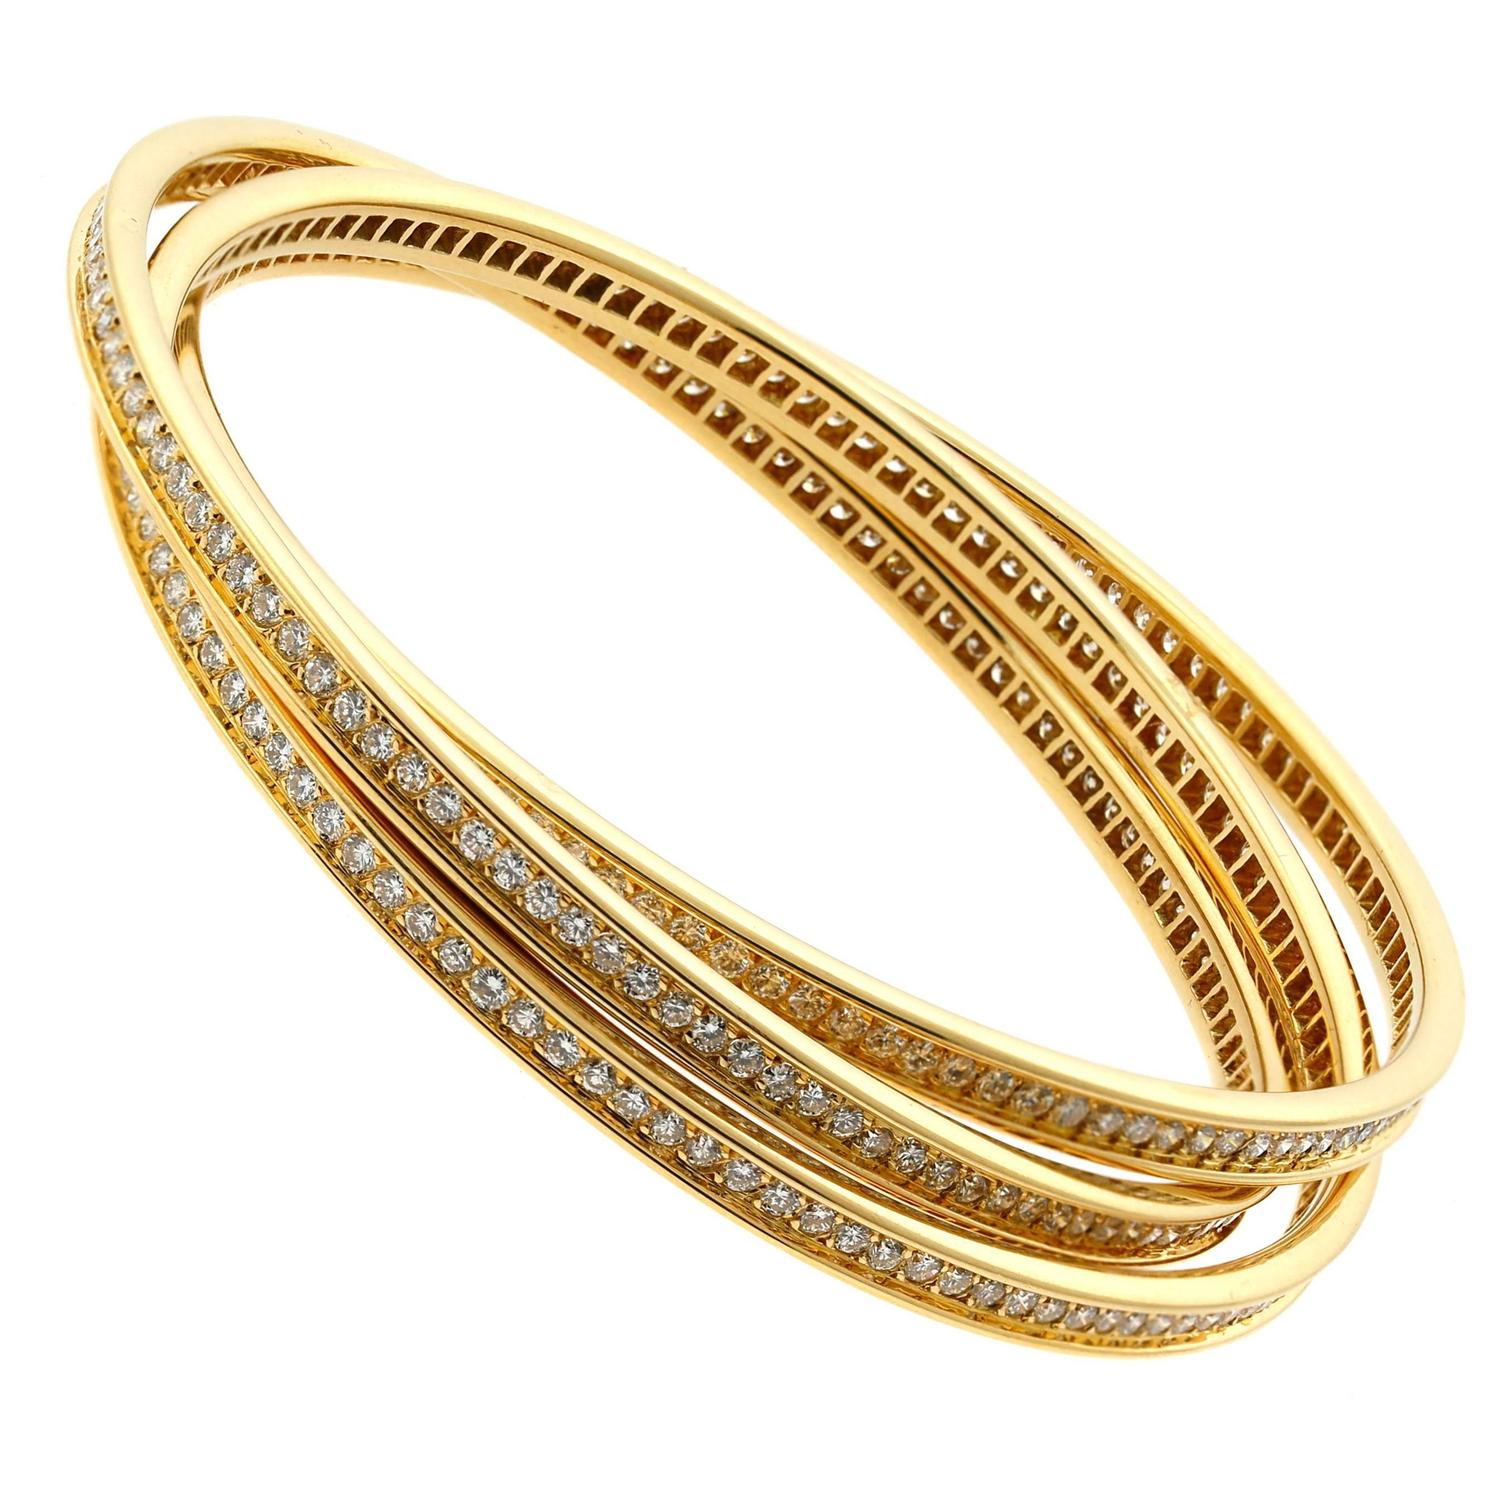 Cartier Trinity Diamond Gold Bangle Bracelet at 1stdibs